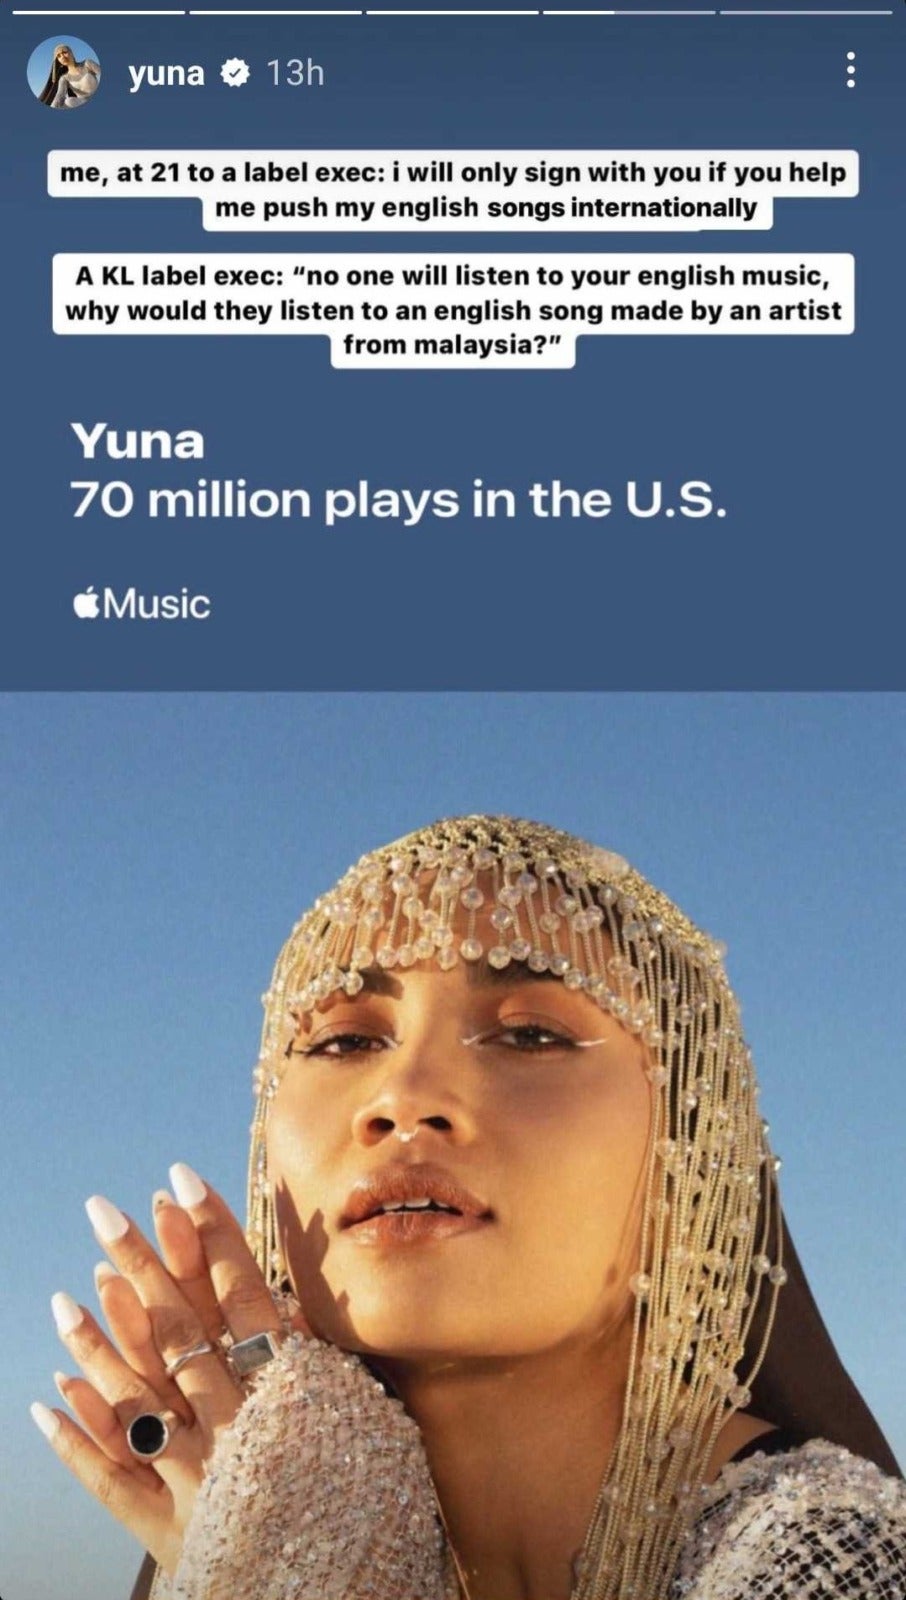 yuna music statistics 1